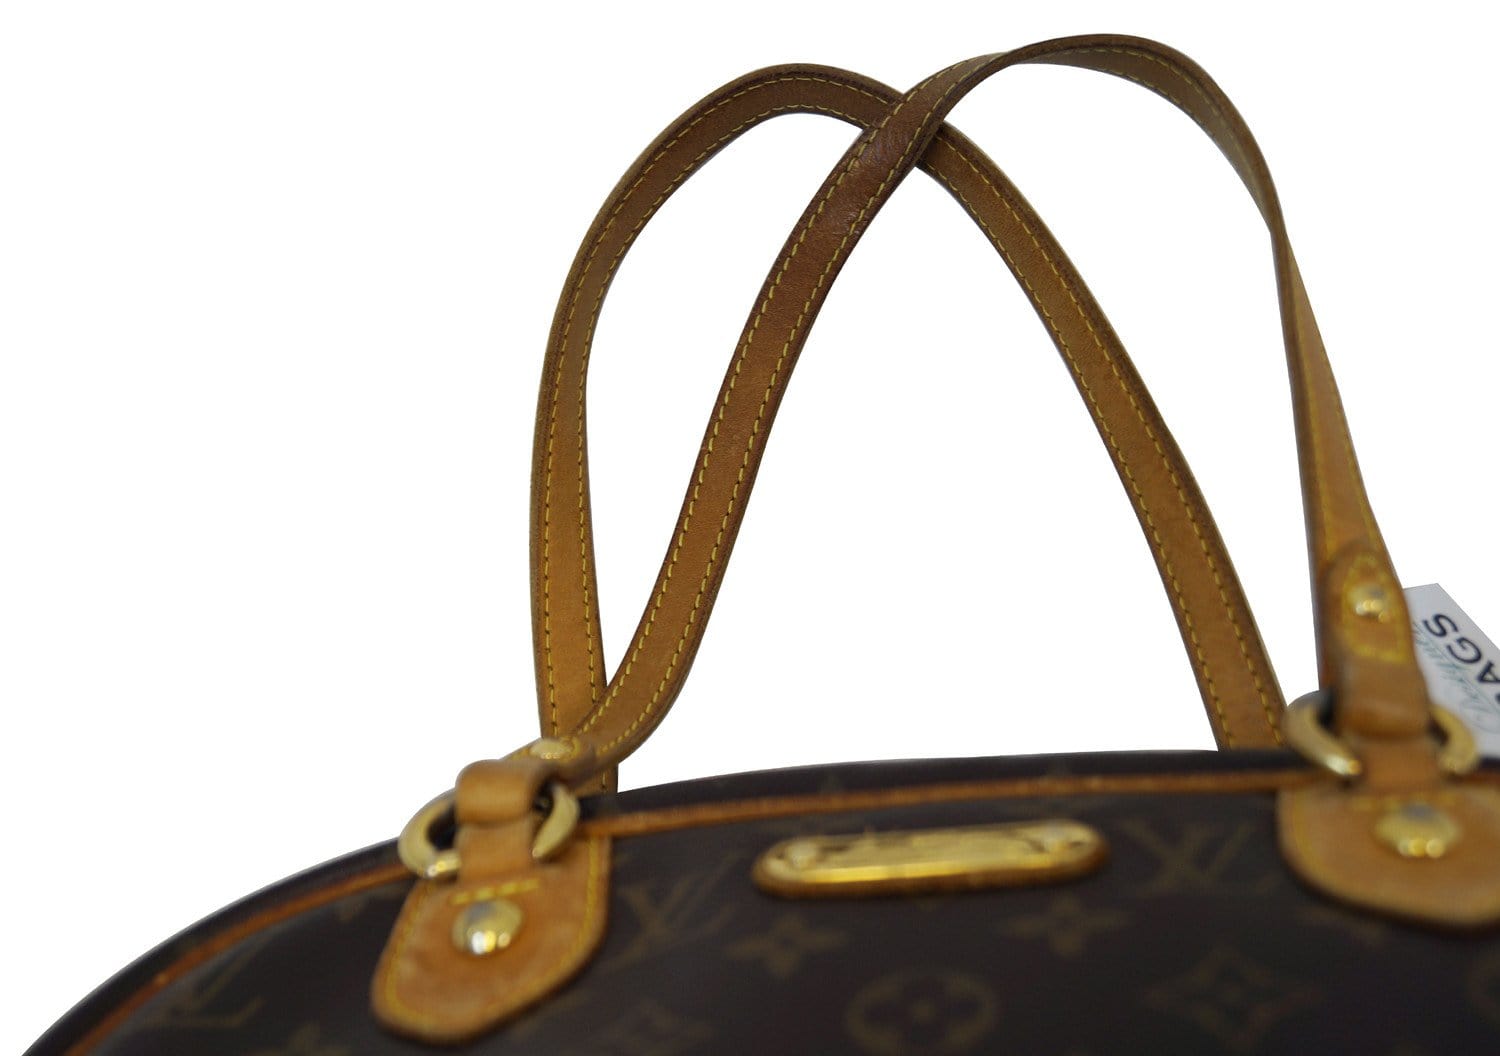 Shop Louis Vuitton Monogram Unisex Street Style Bag in Bag Totes (M58907)  by Pureet